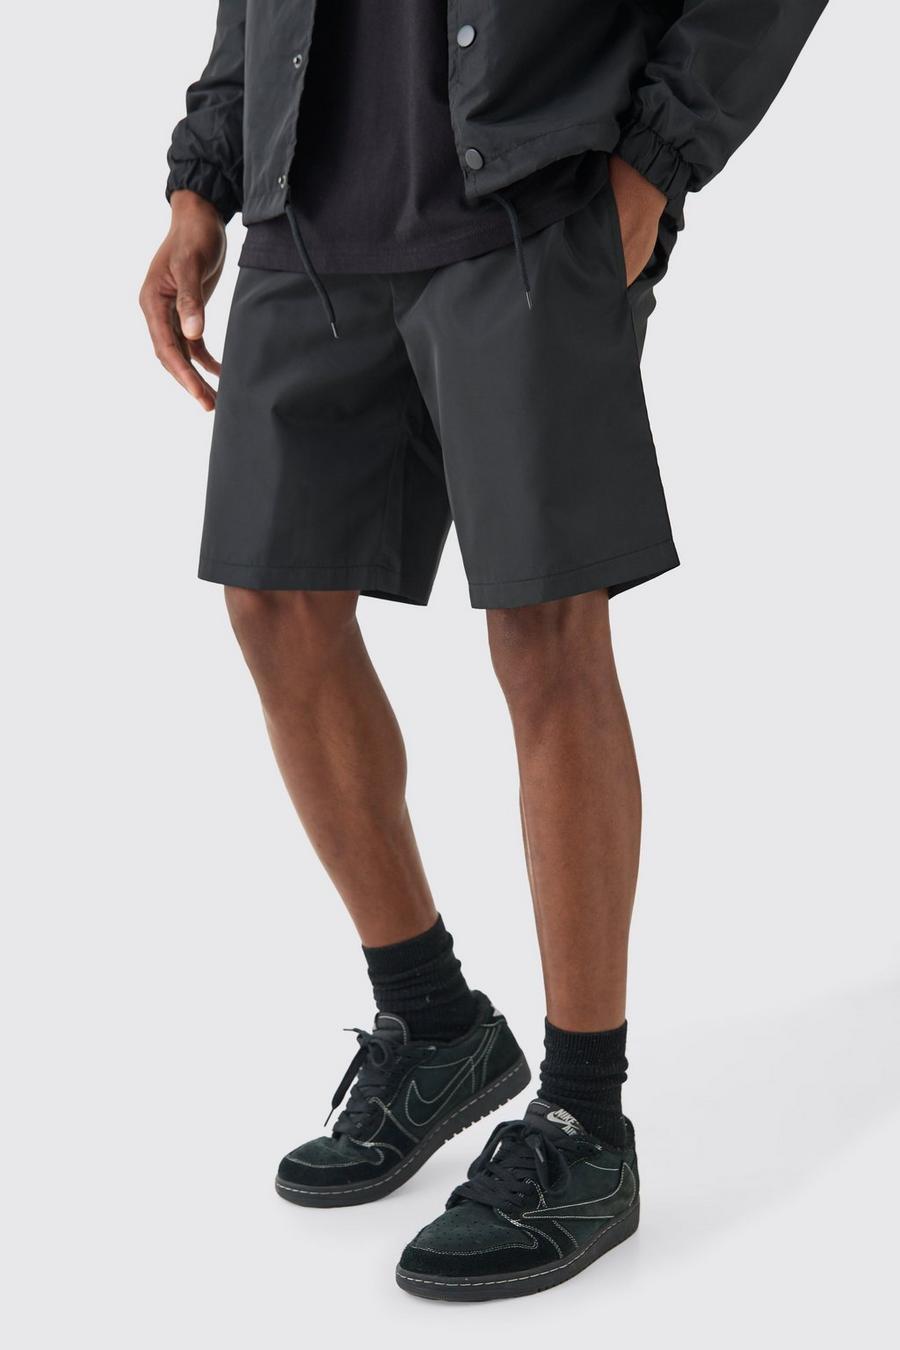 Black Shorts i nylon med resår i midjan